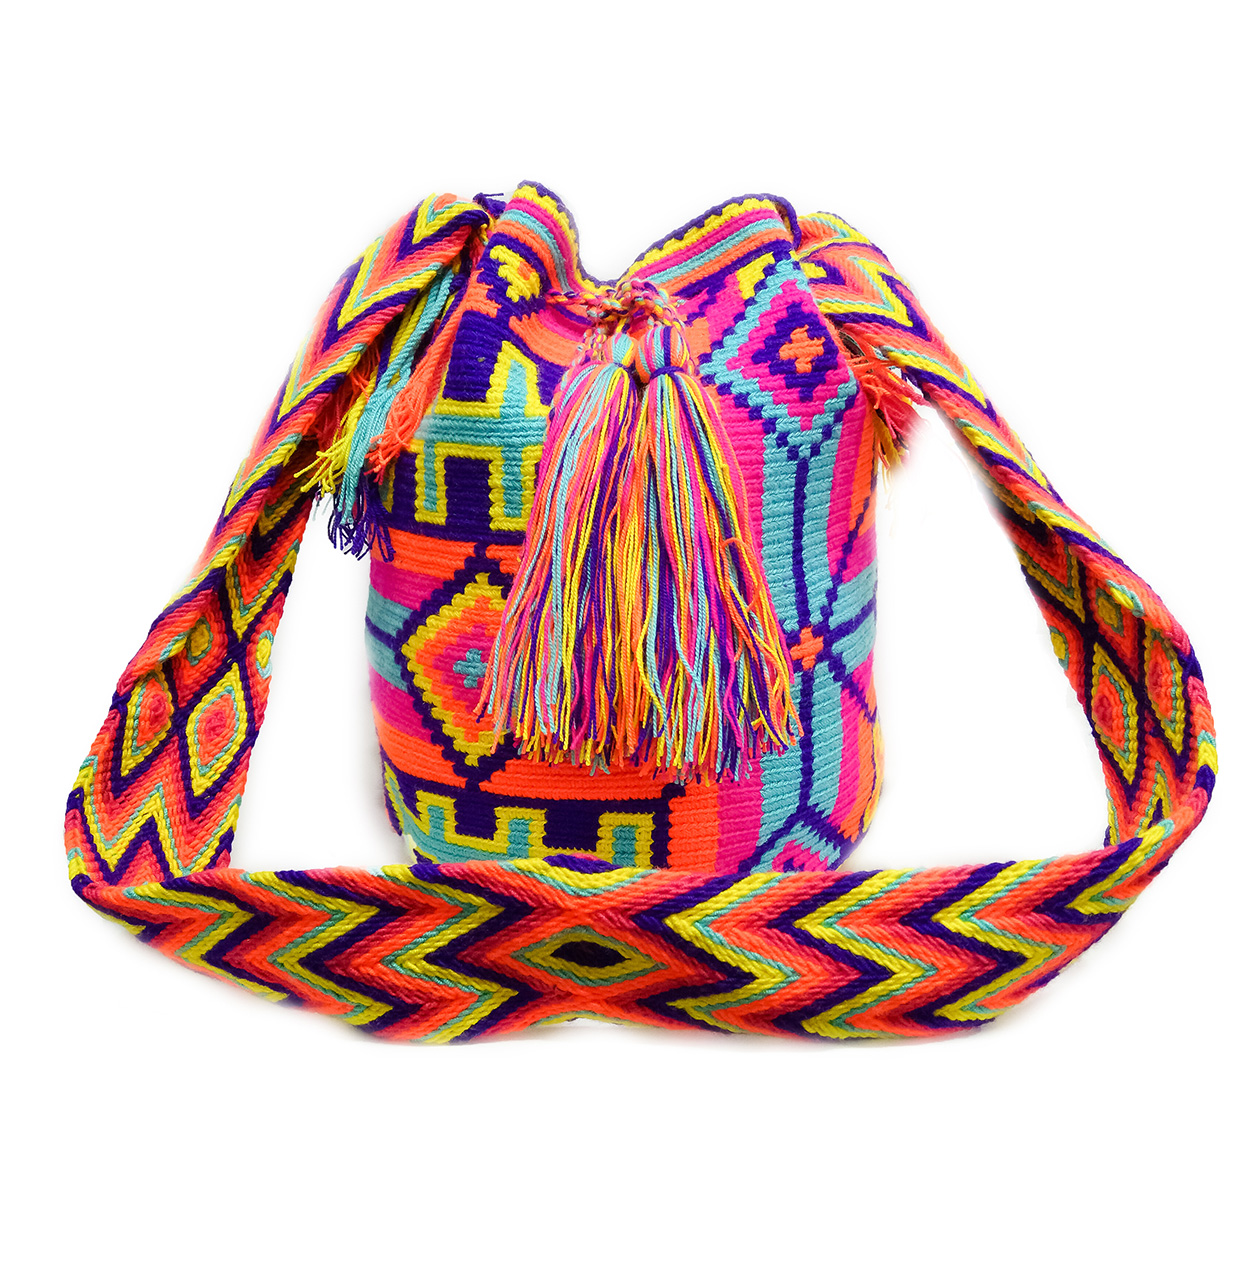 Colombian Wayuu Mochila Bags Online sale - Wayuu Mochila Bag in orange blue and bright colors